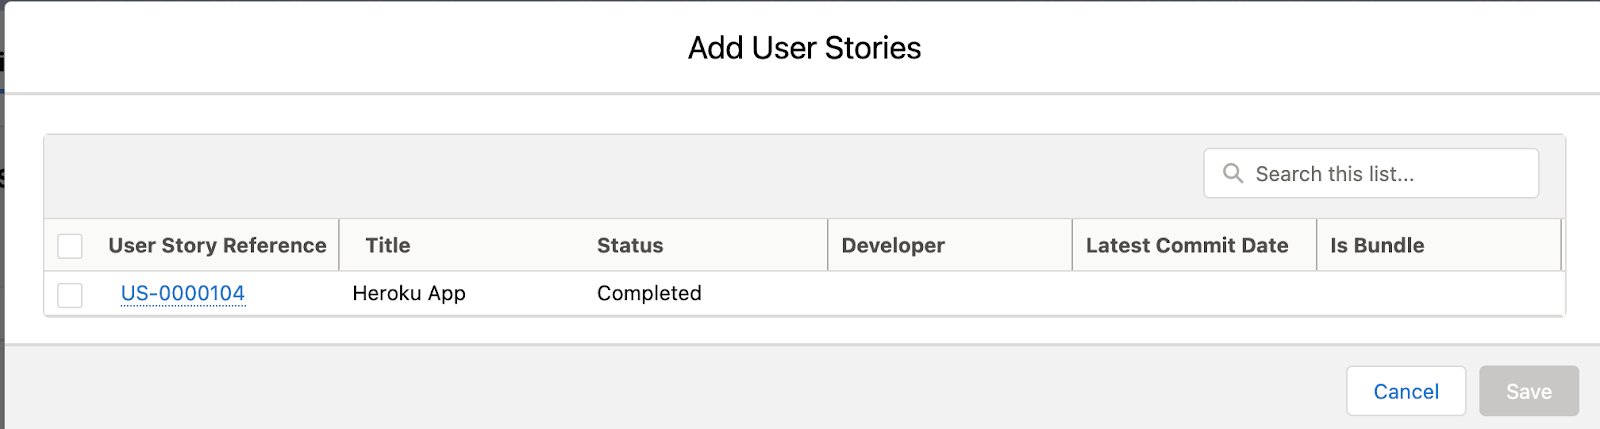 User Stories Tab